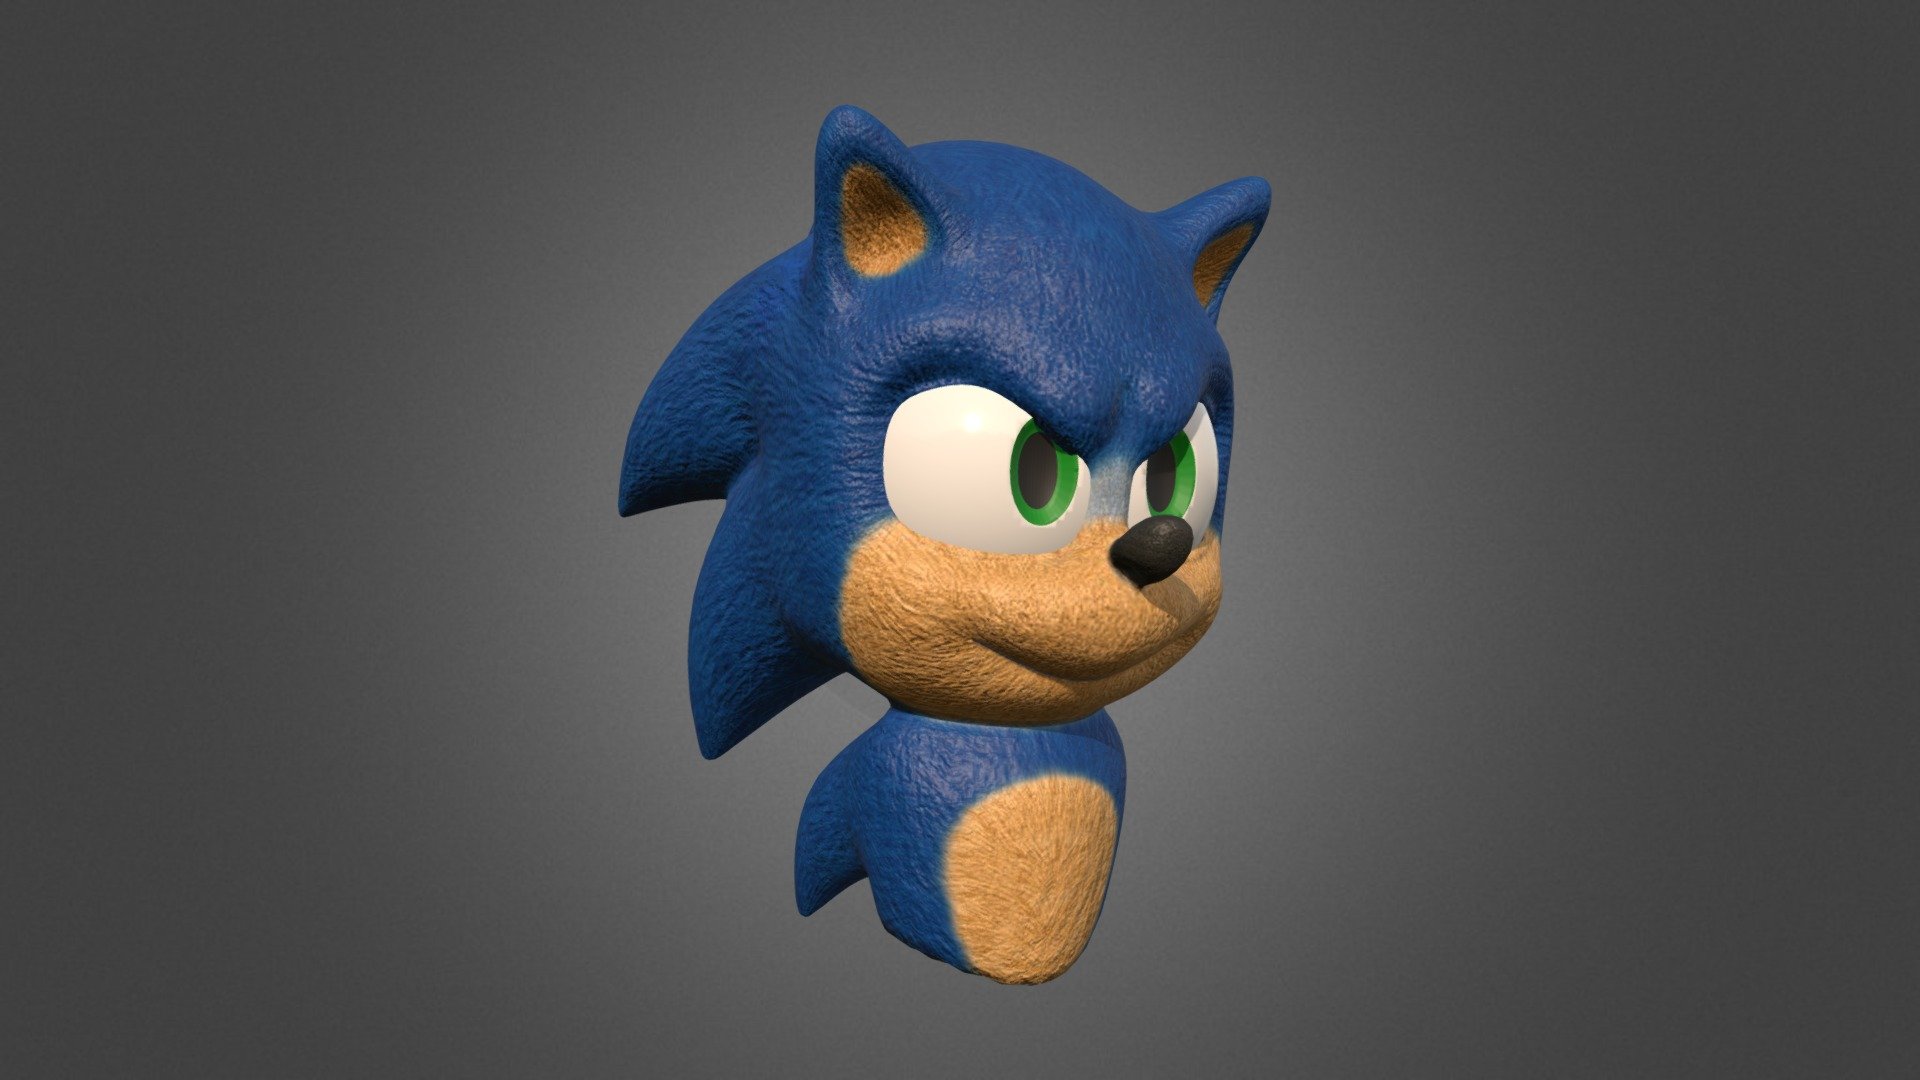 Sonic The Hedgehog ( Sonic O Filme 2 ) in 2023